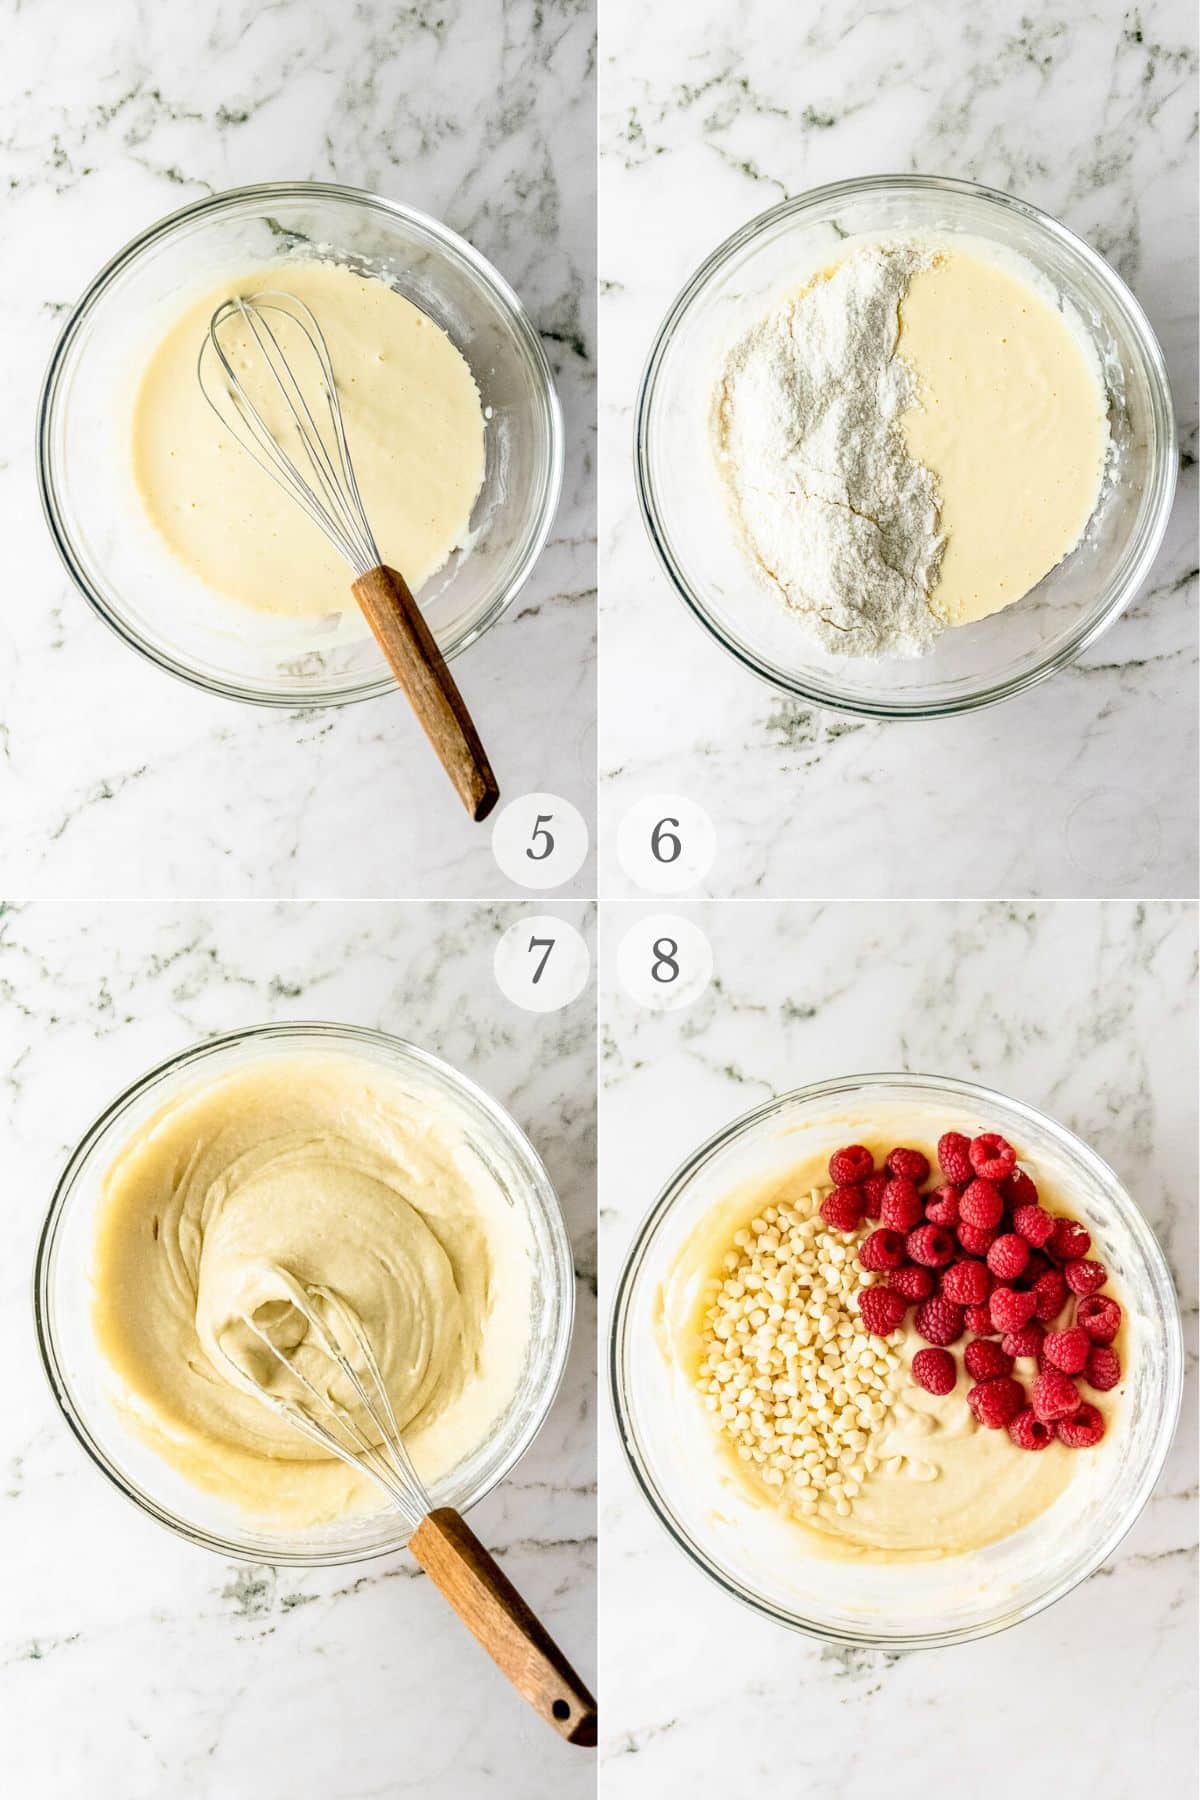 white chocolate raspberry muffins recipe steps 5-8.